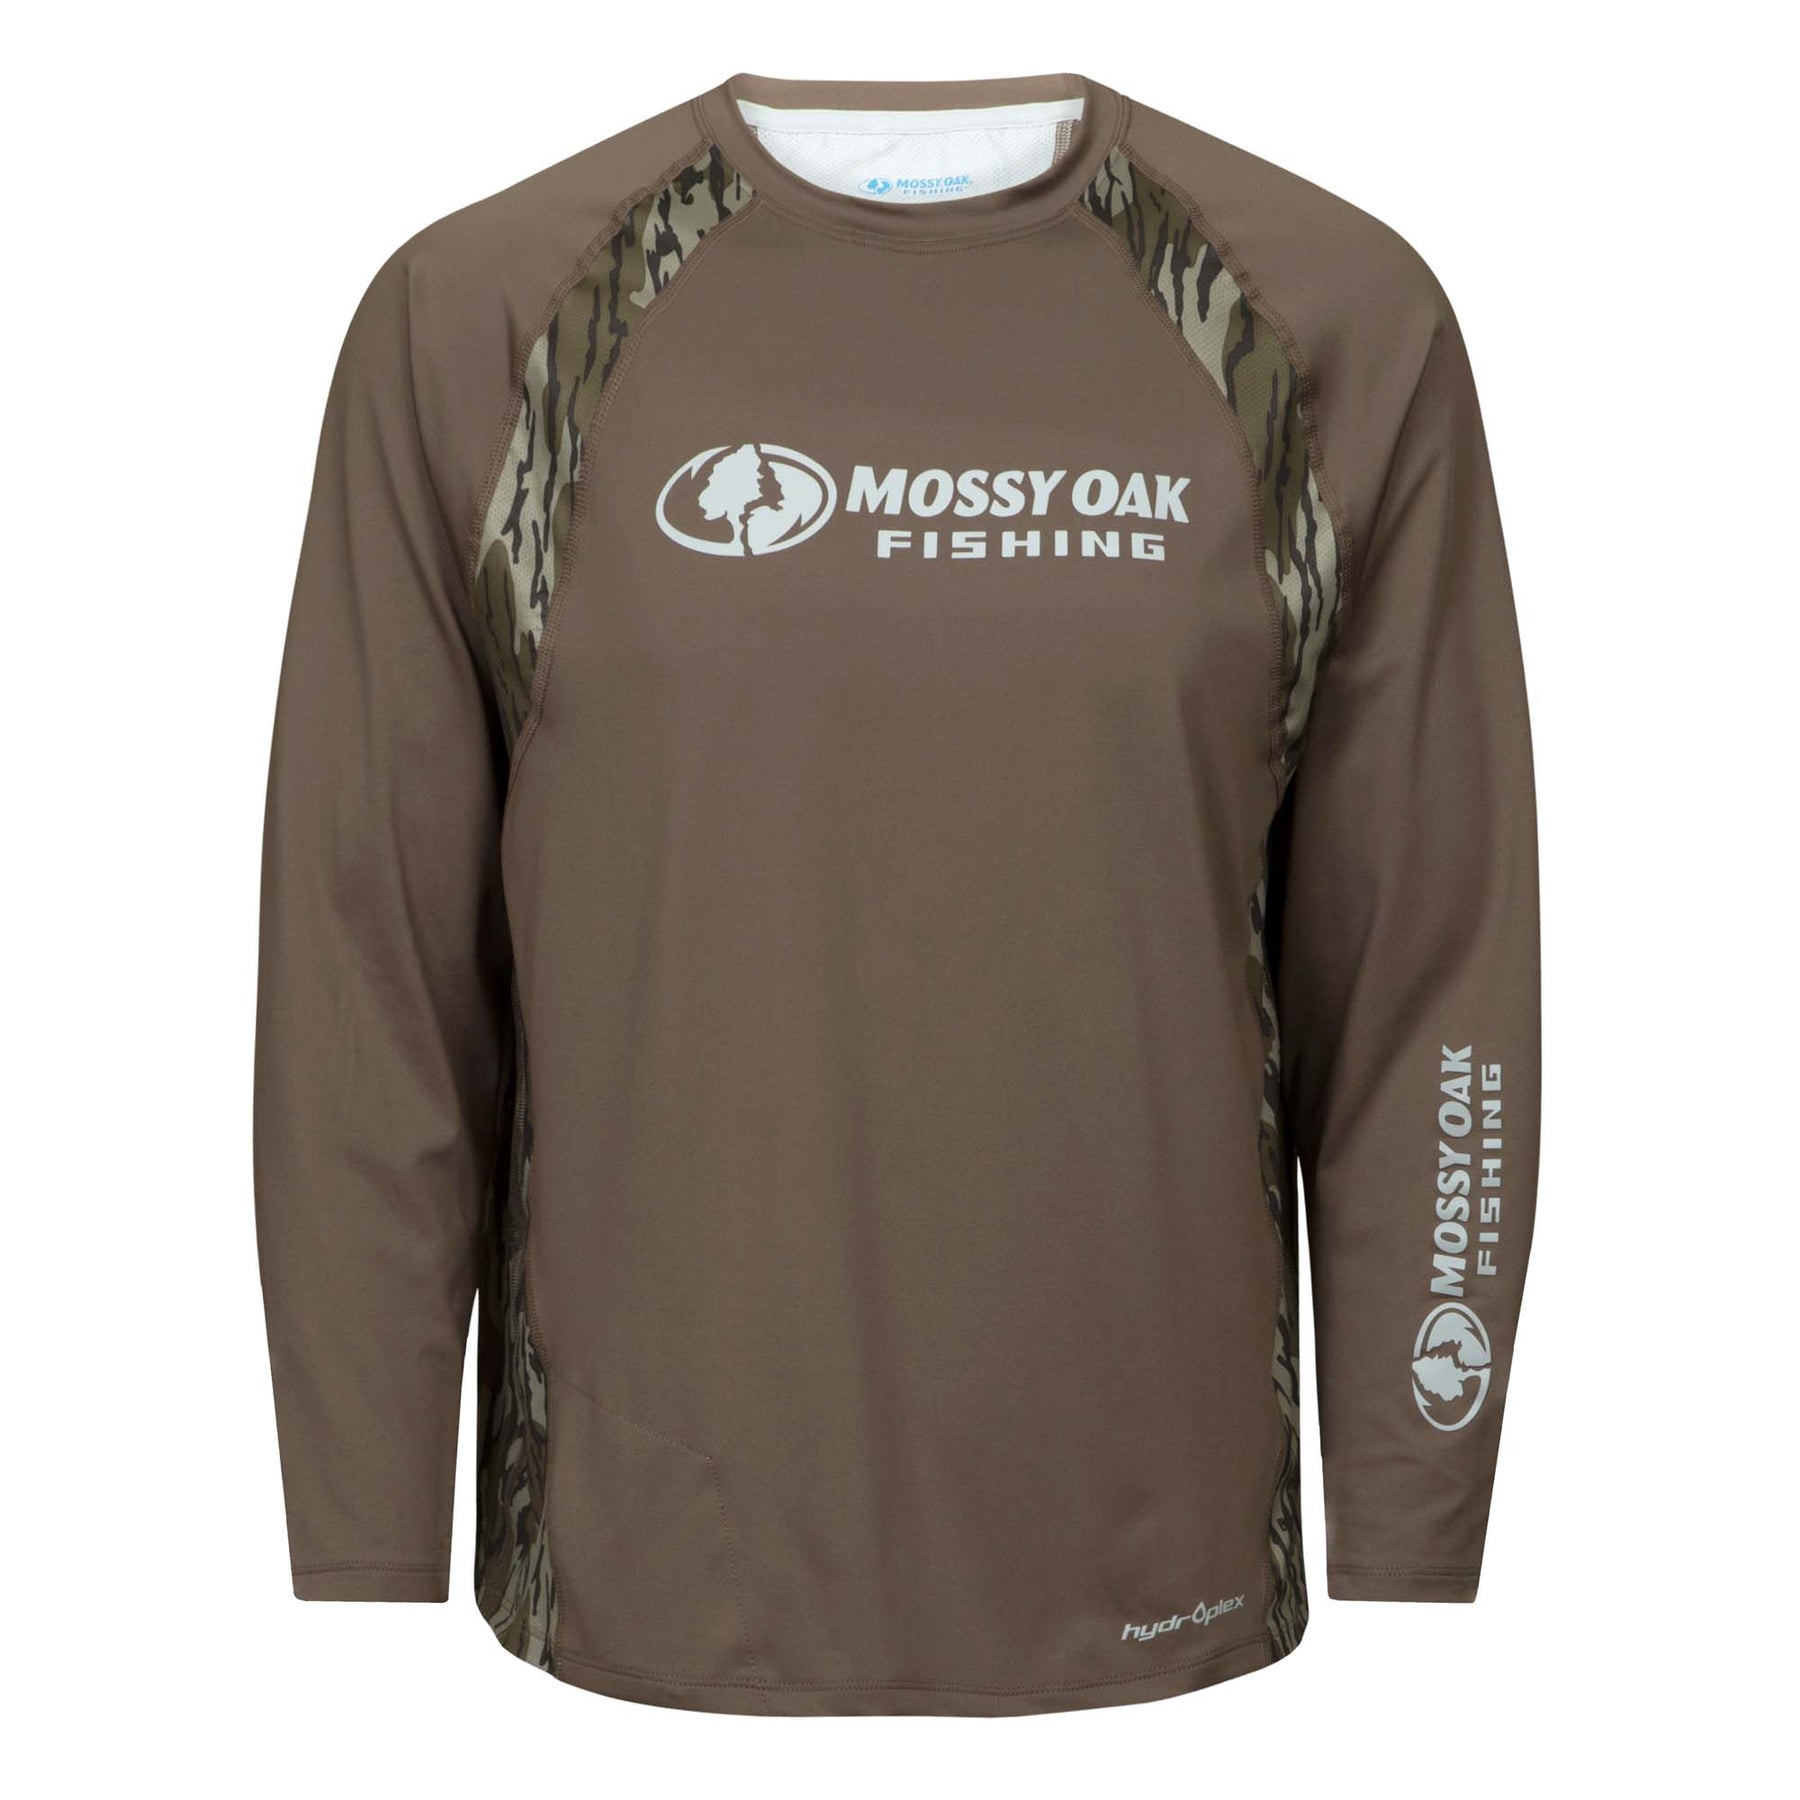 Mossy Oak Men's Fishing Shirts Long Sleeve with India